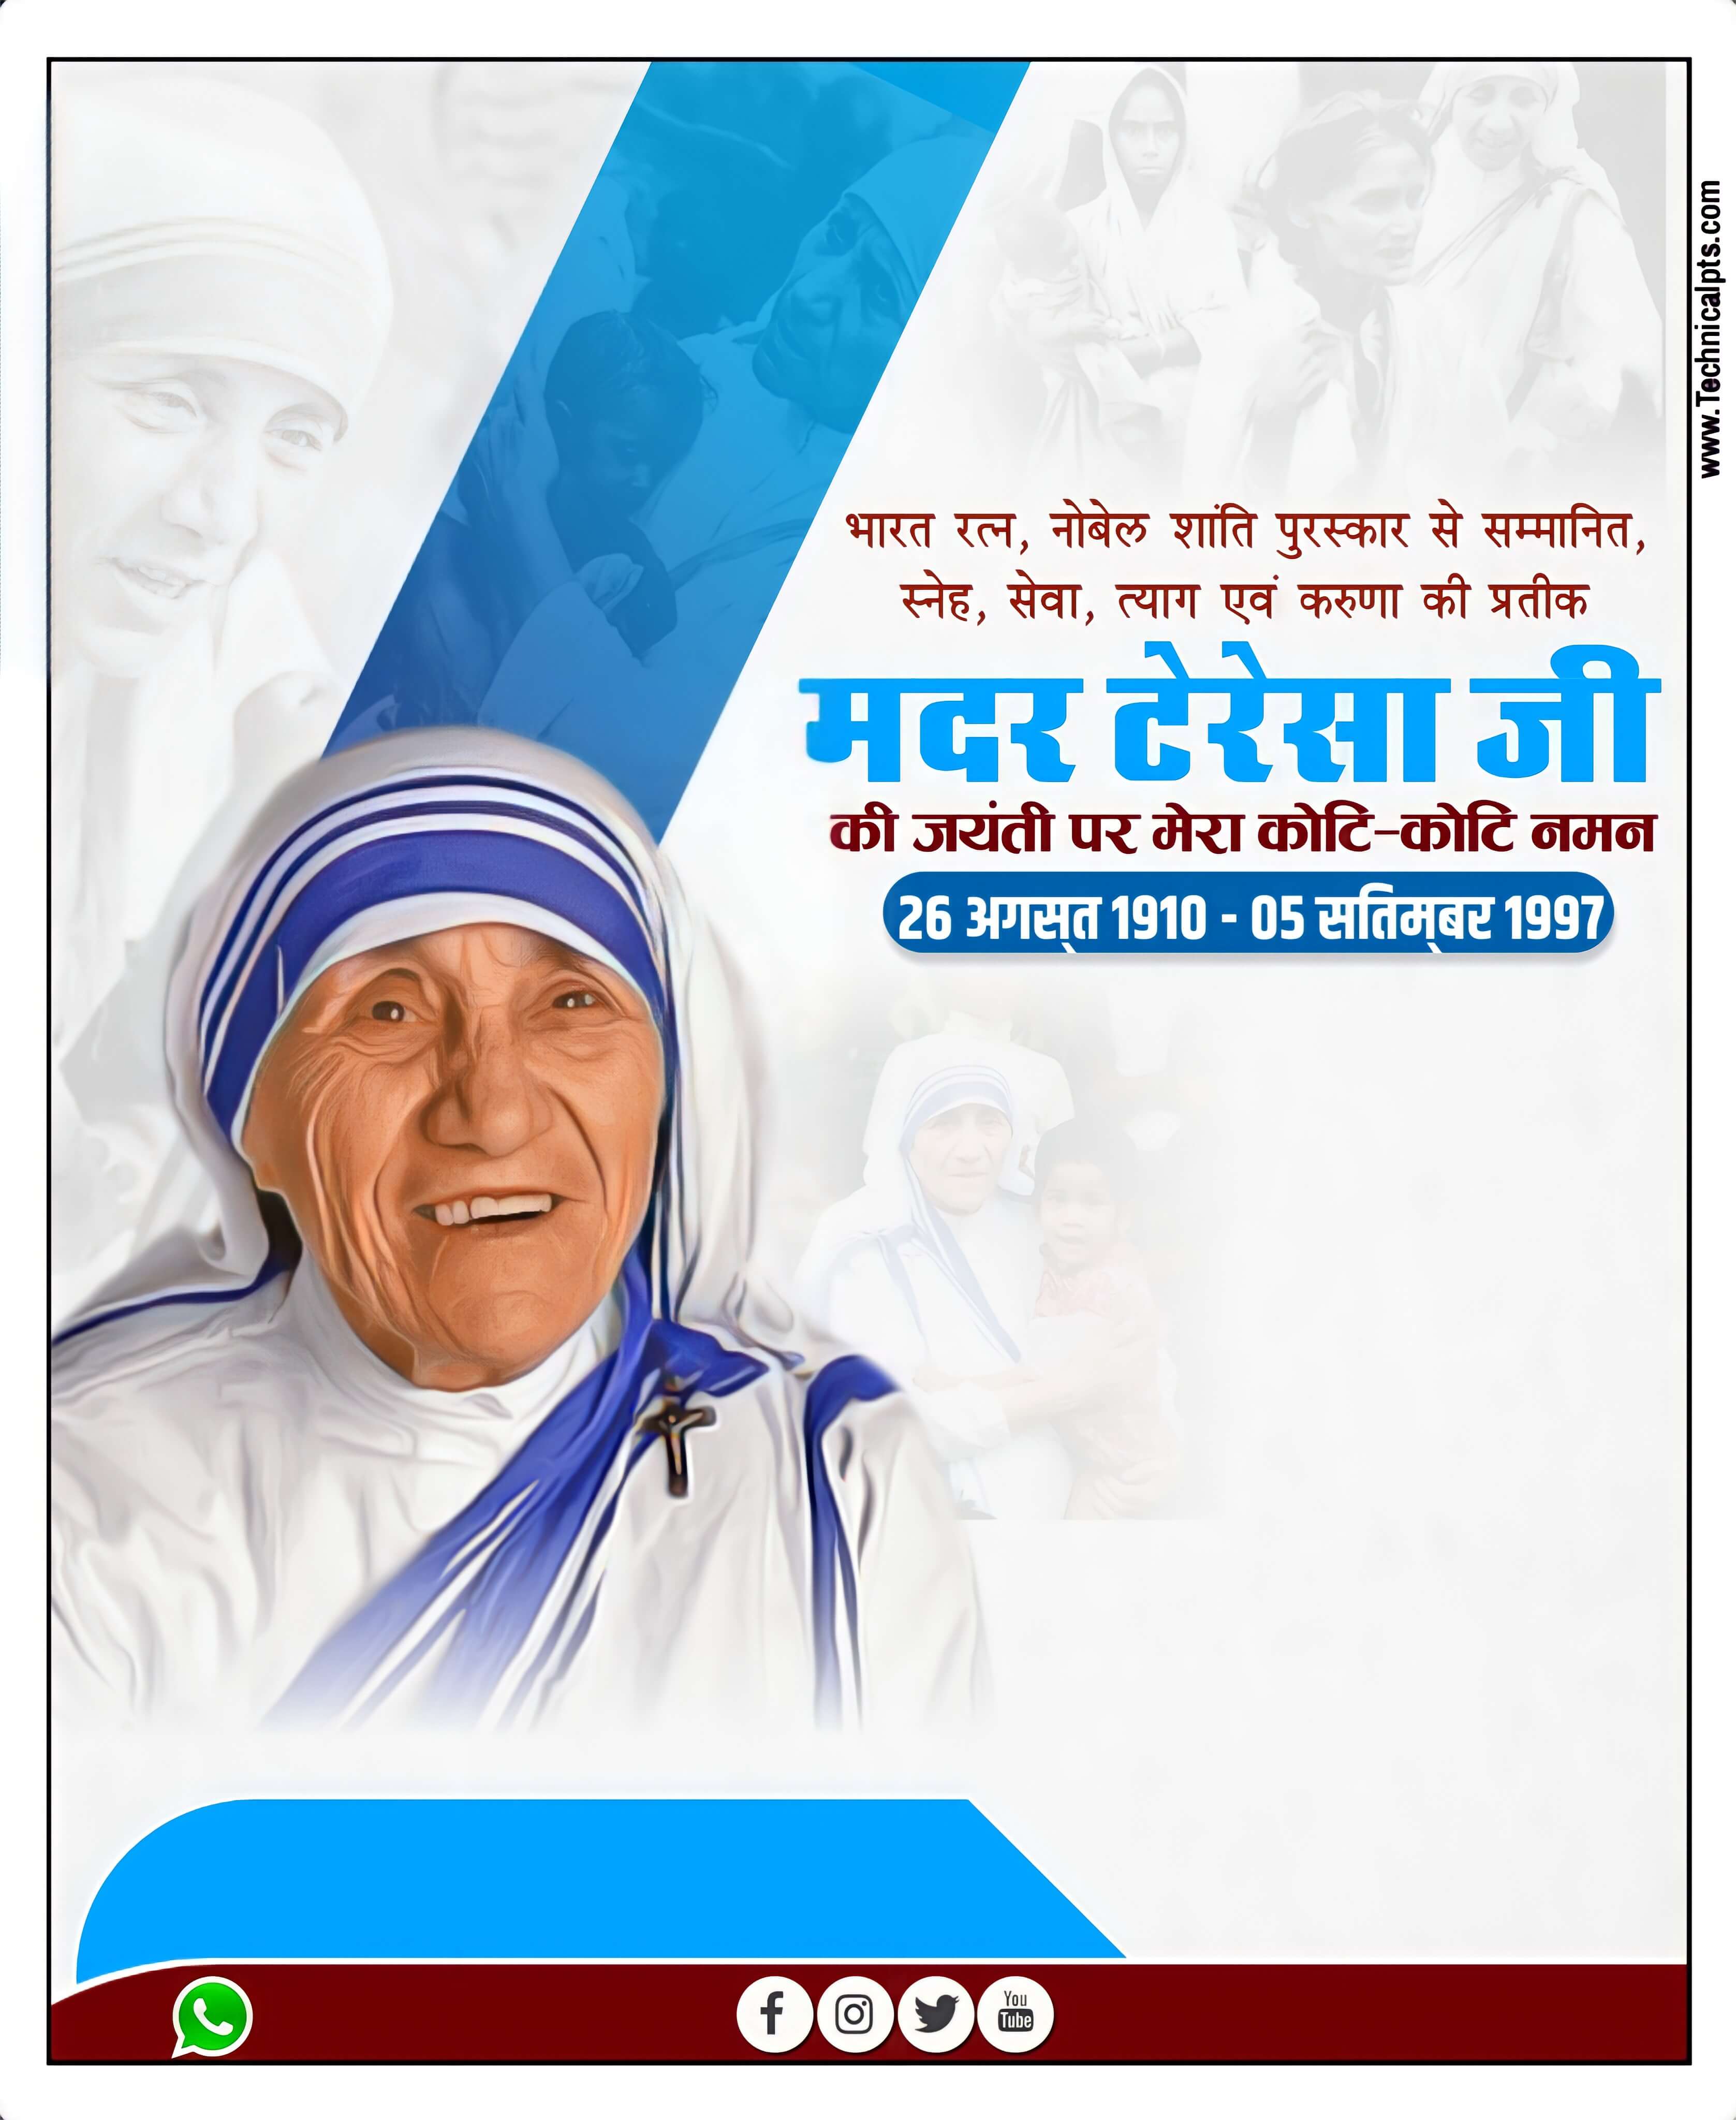 Mother Teresa Jayanti poster plp file| Mother Teresa Birthday Banner Editing | Mother Teresa Jayanti banner editing